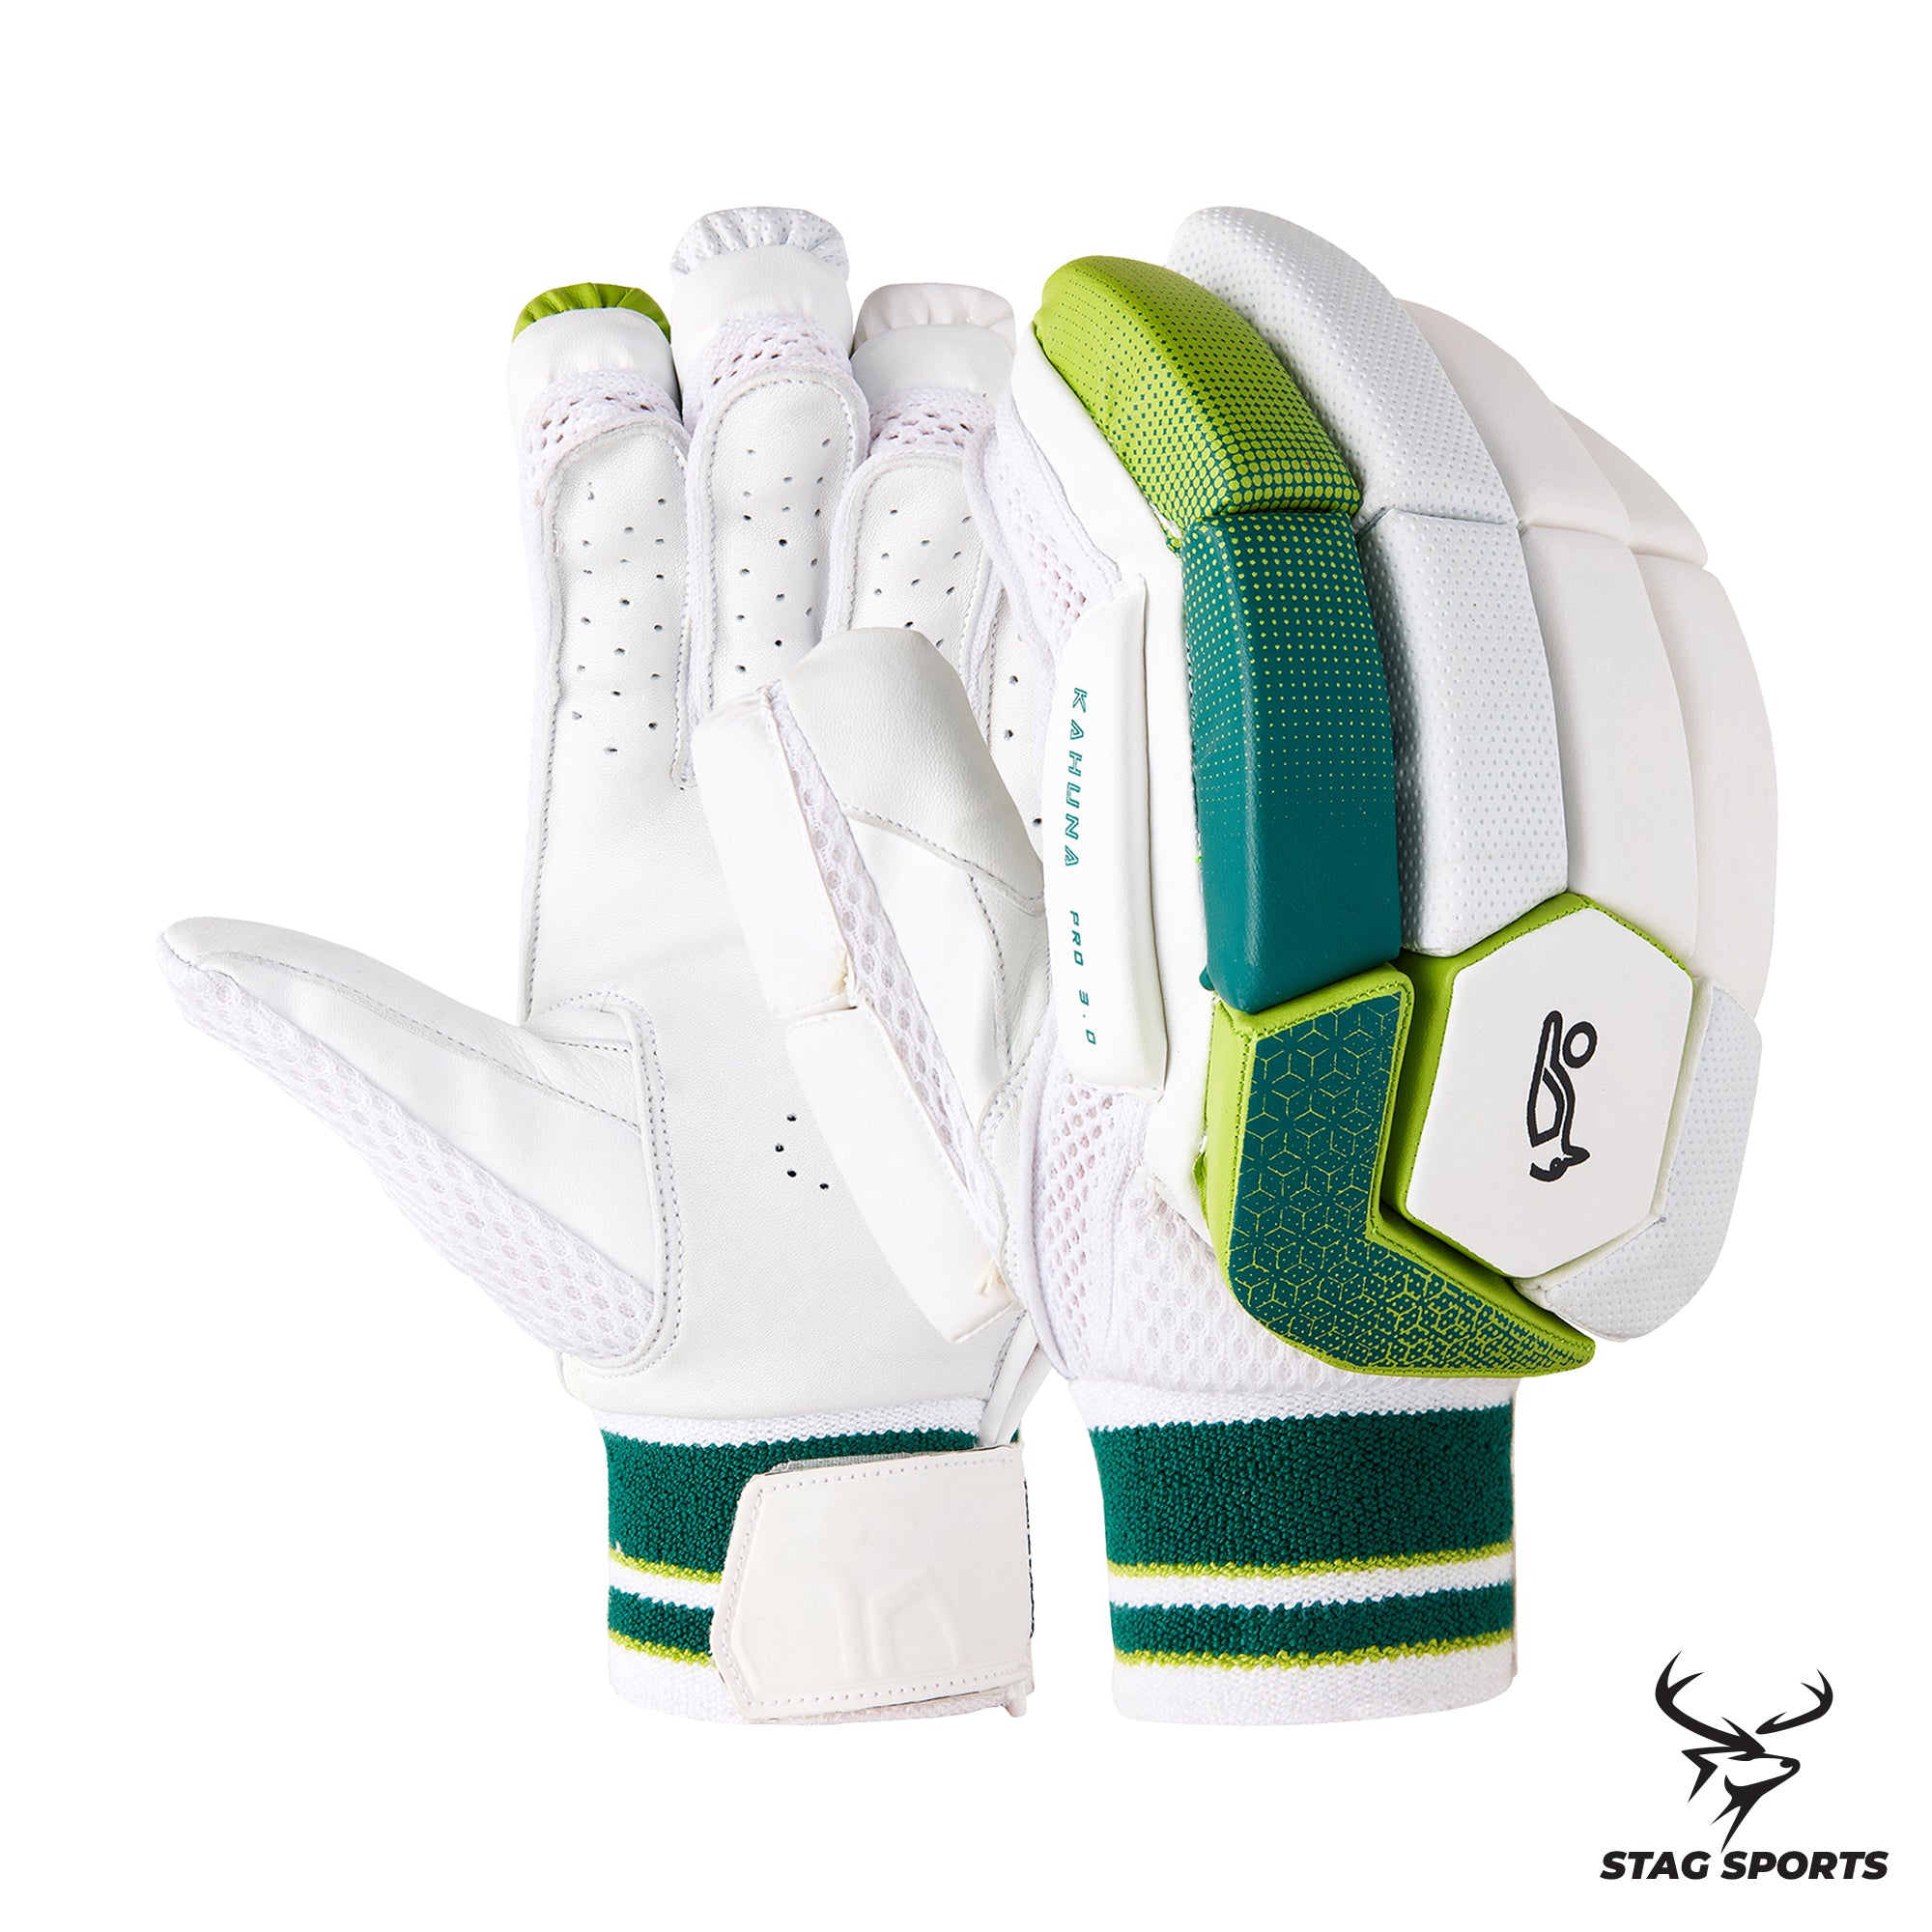 Kookaburra kahuna Pro 3.0 Cricket Batting Gloves